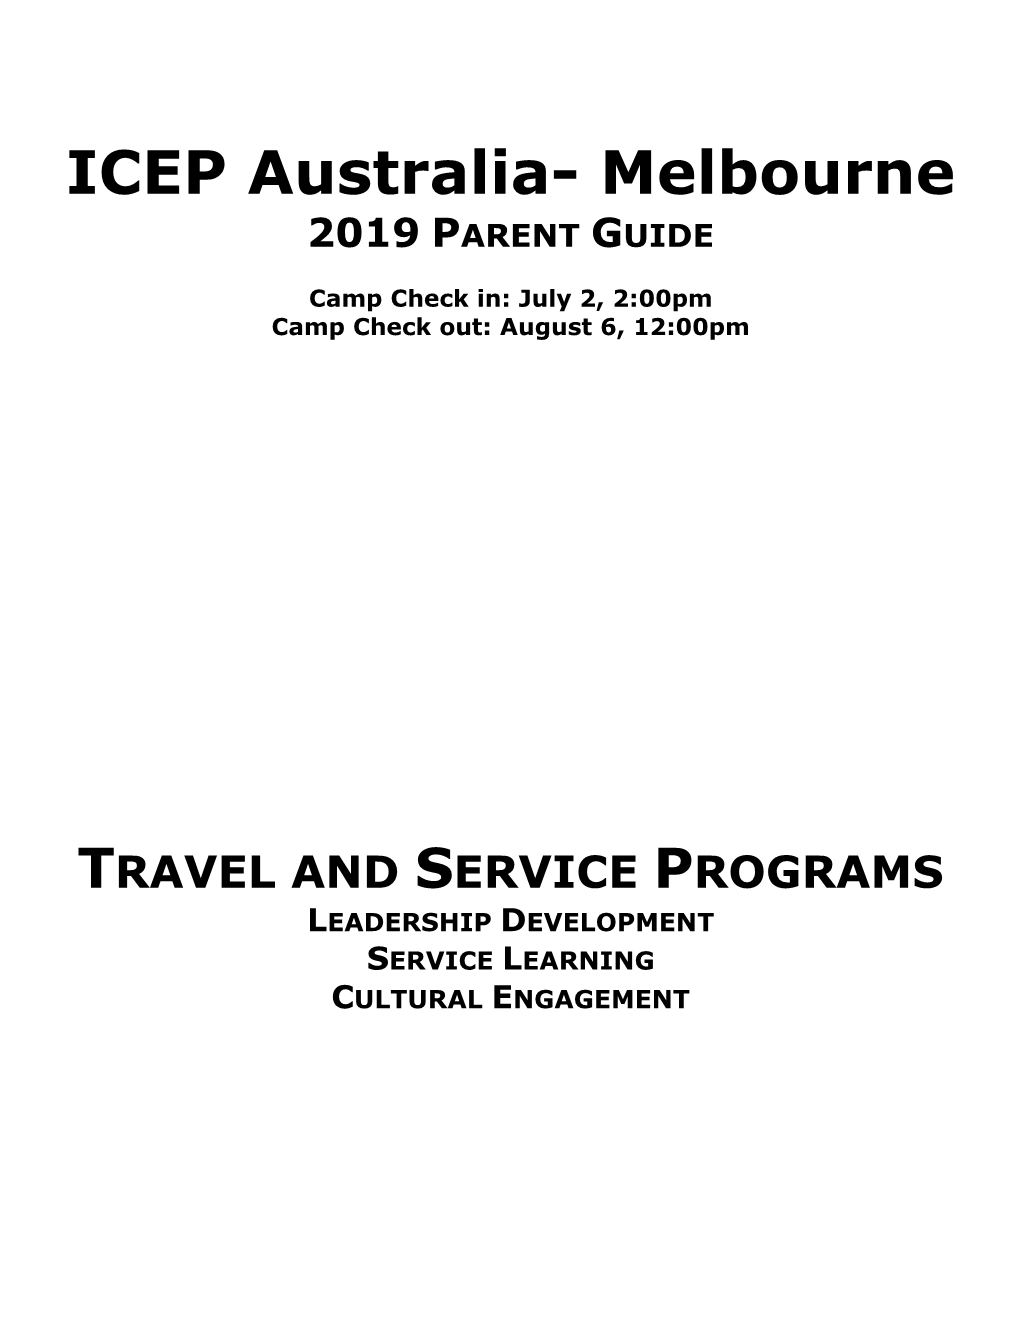 ICEP Australia- Melbourne 2019 PARENT GUIDE